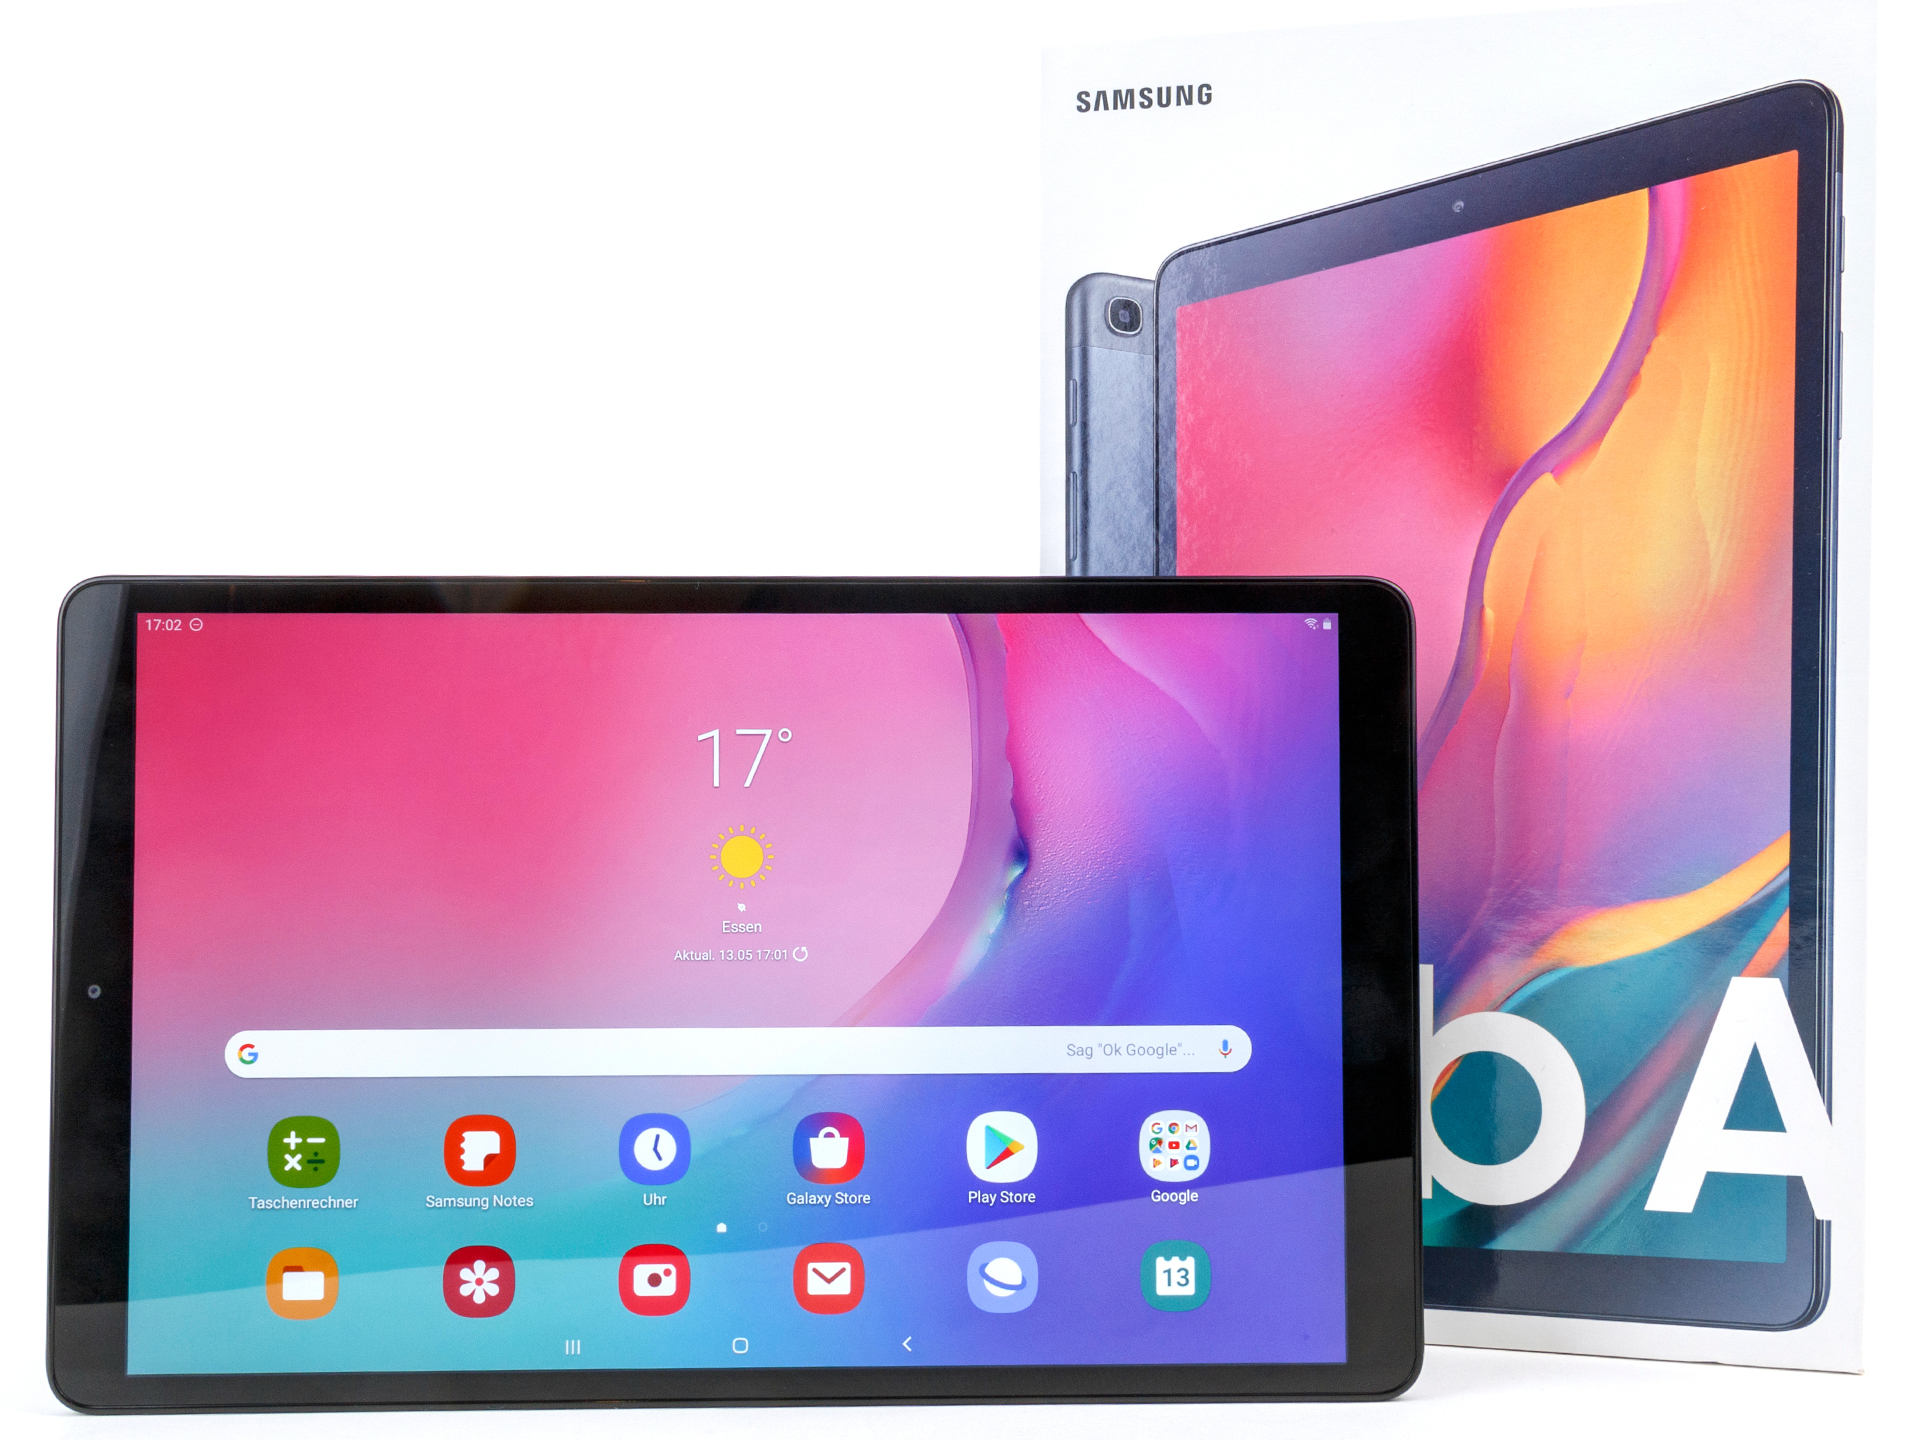 Promo sur cette super tablette Samsung Galaxy Tab A10